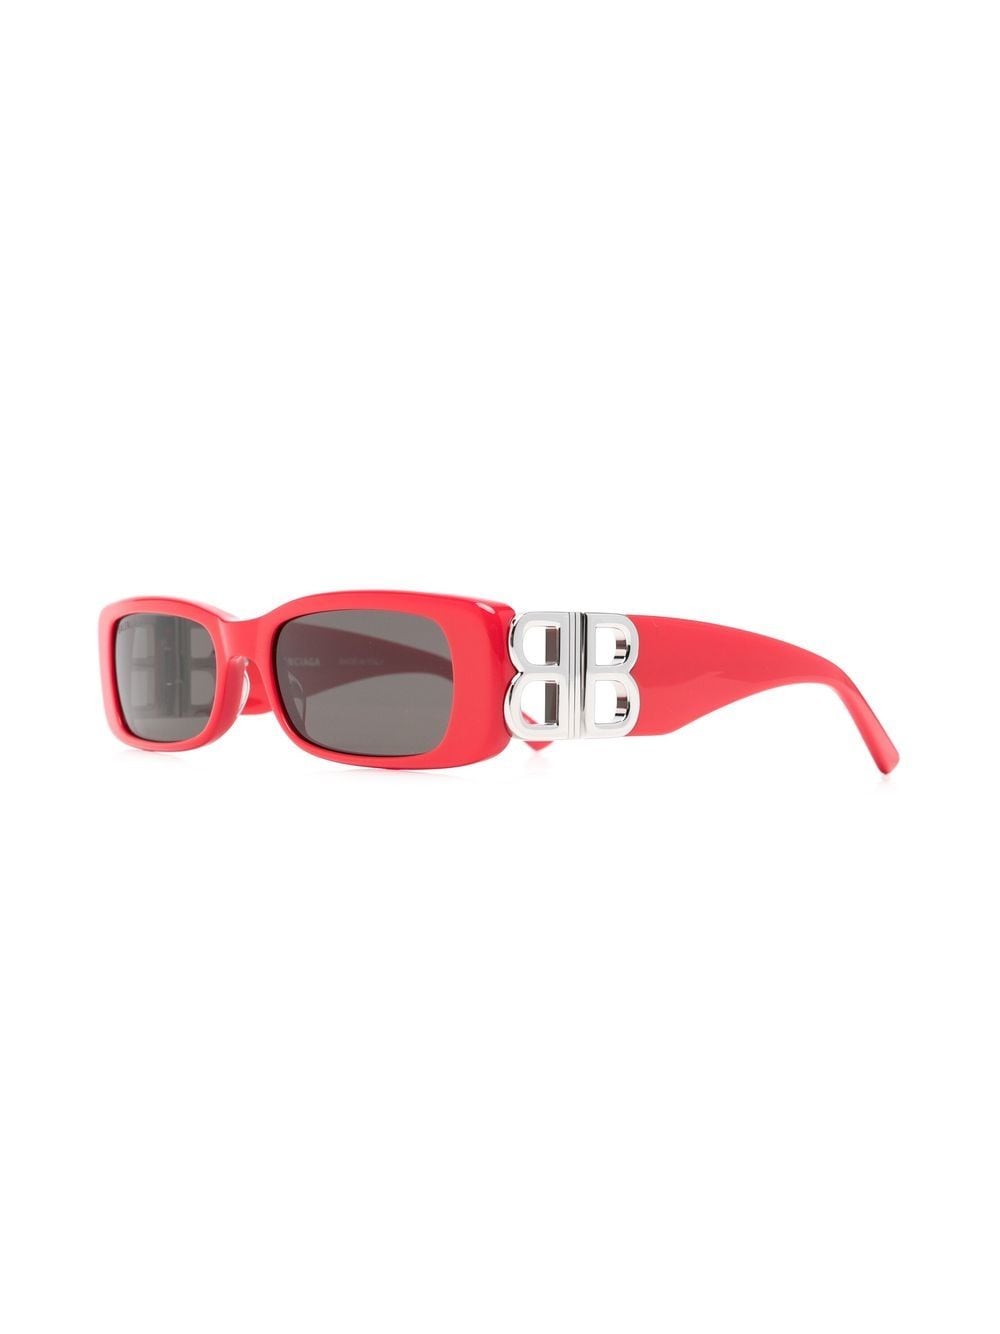 Dynasty rectangle-frame sunglasses